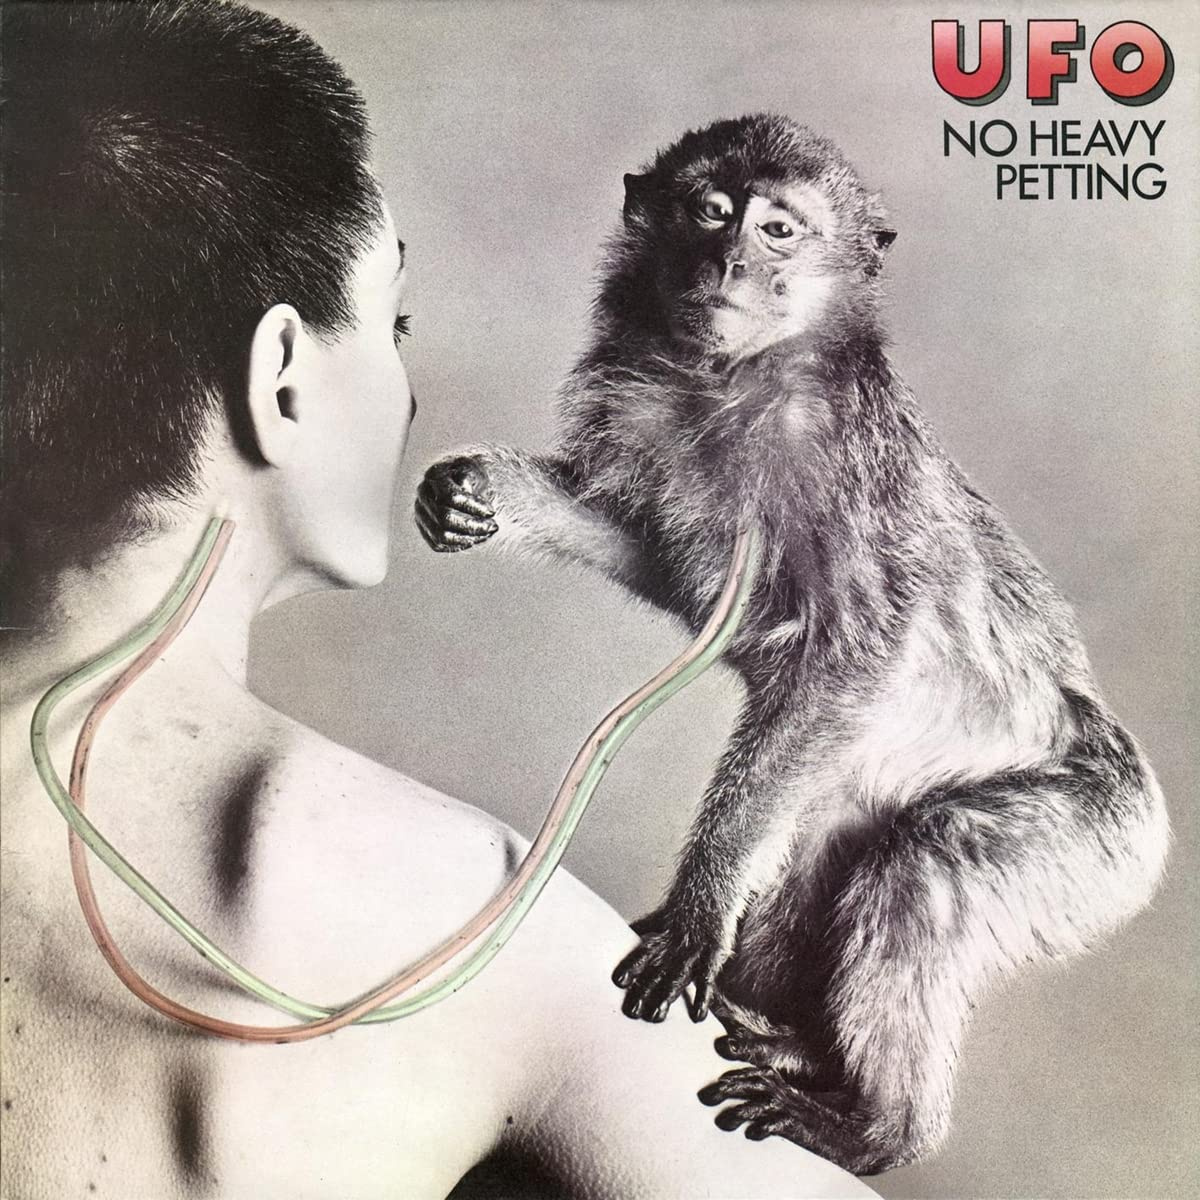 UFO - No Heavy Petting vinyl cover